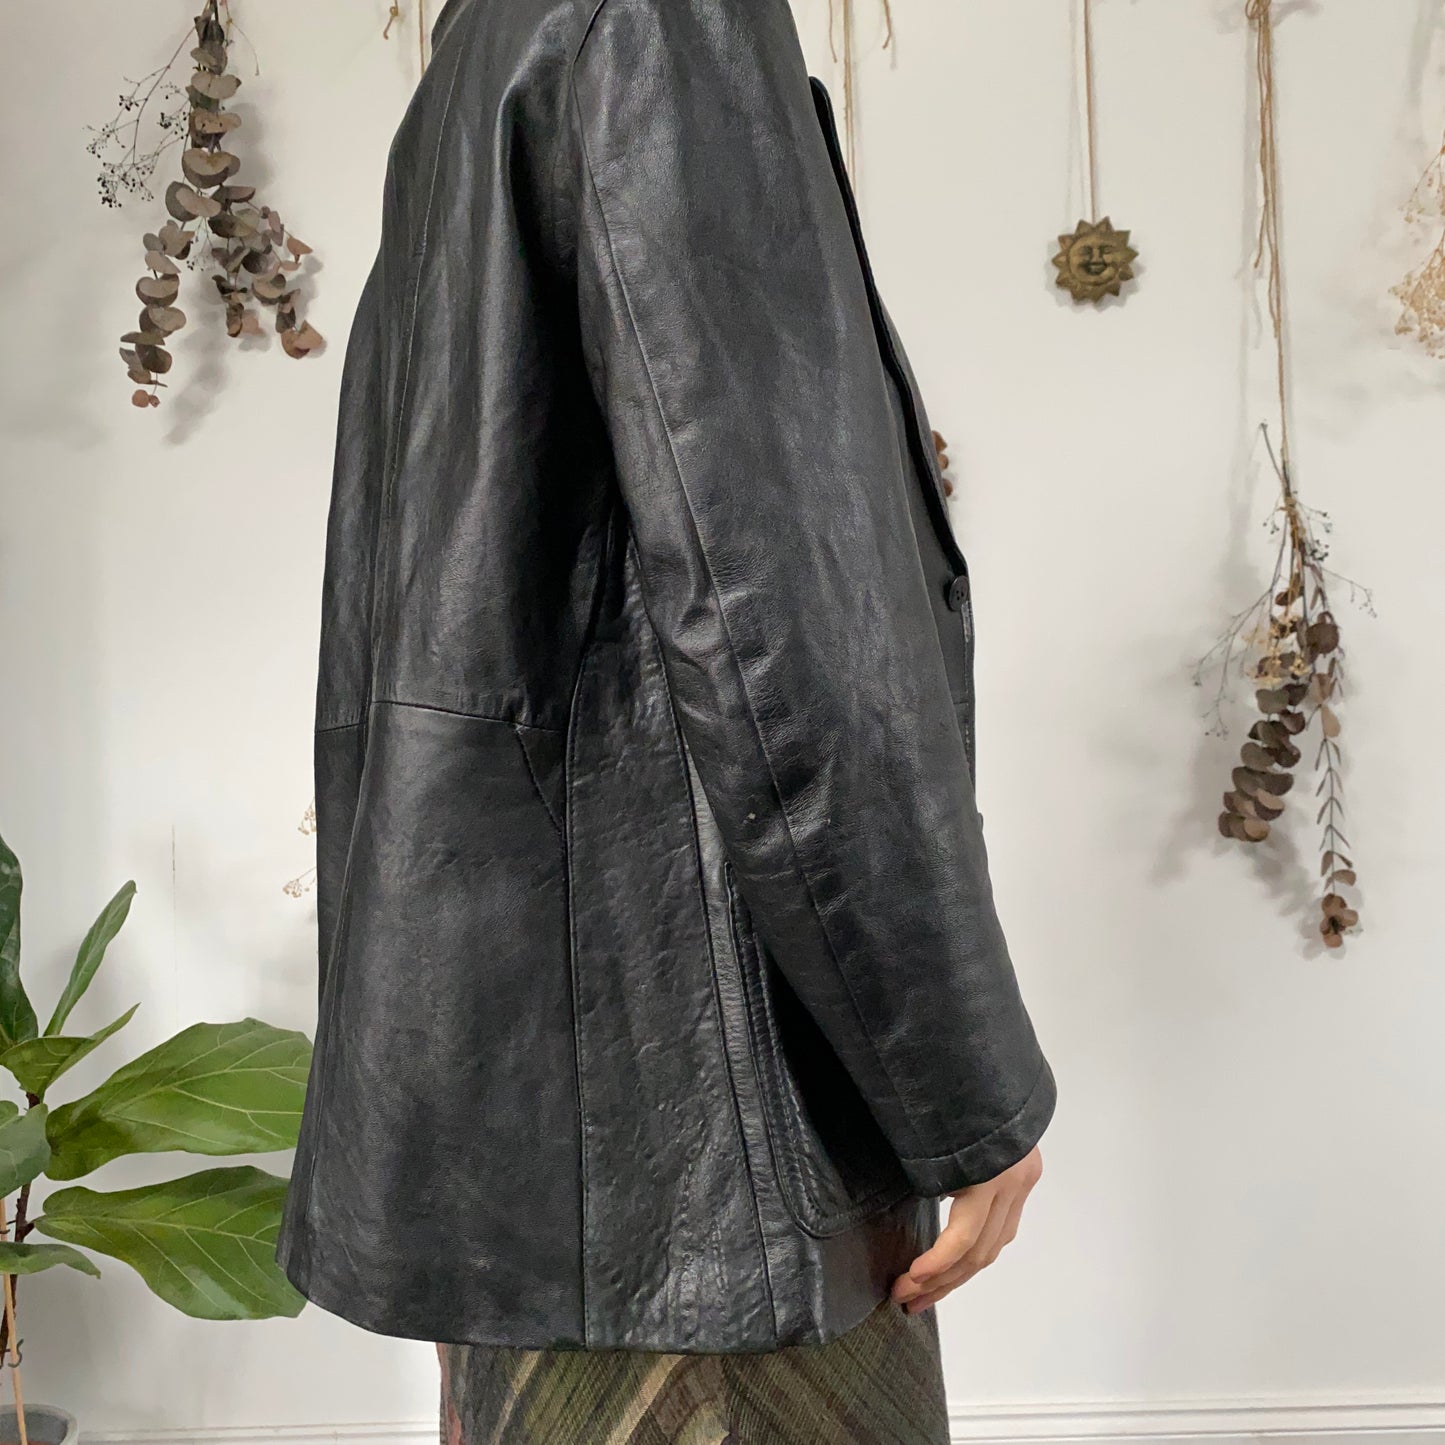 Black leather jacket - size M/L